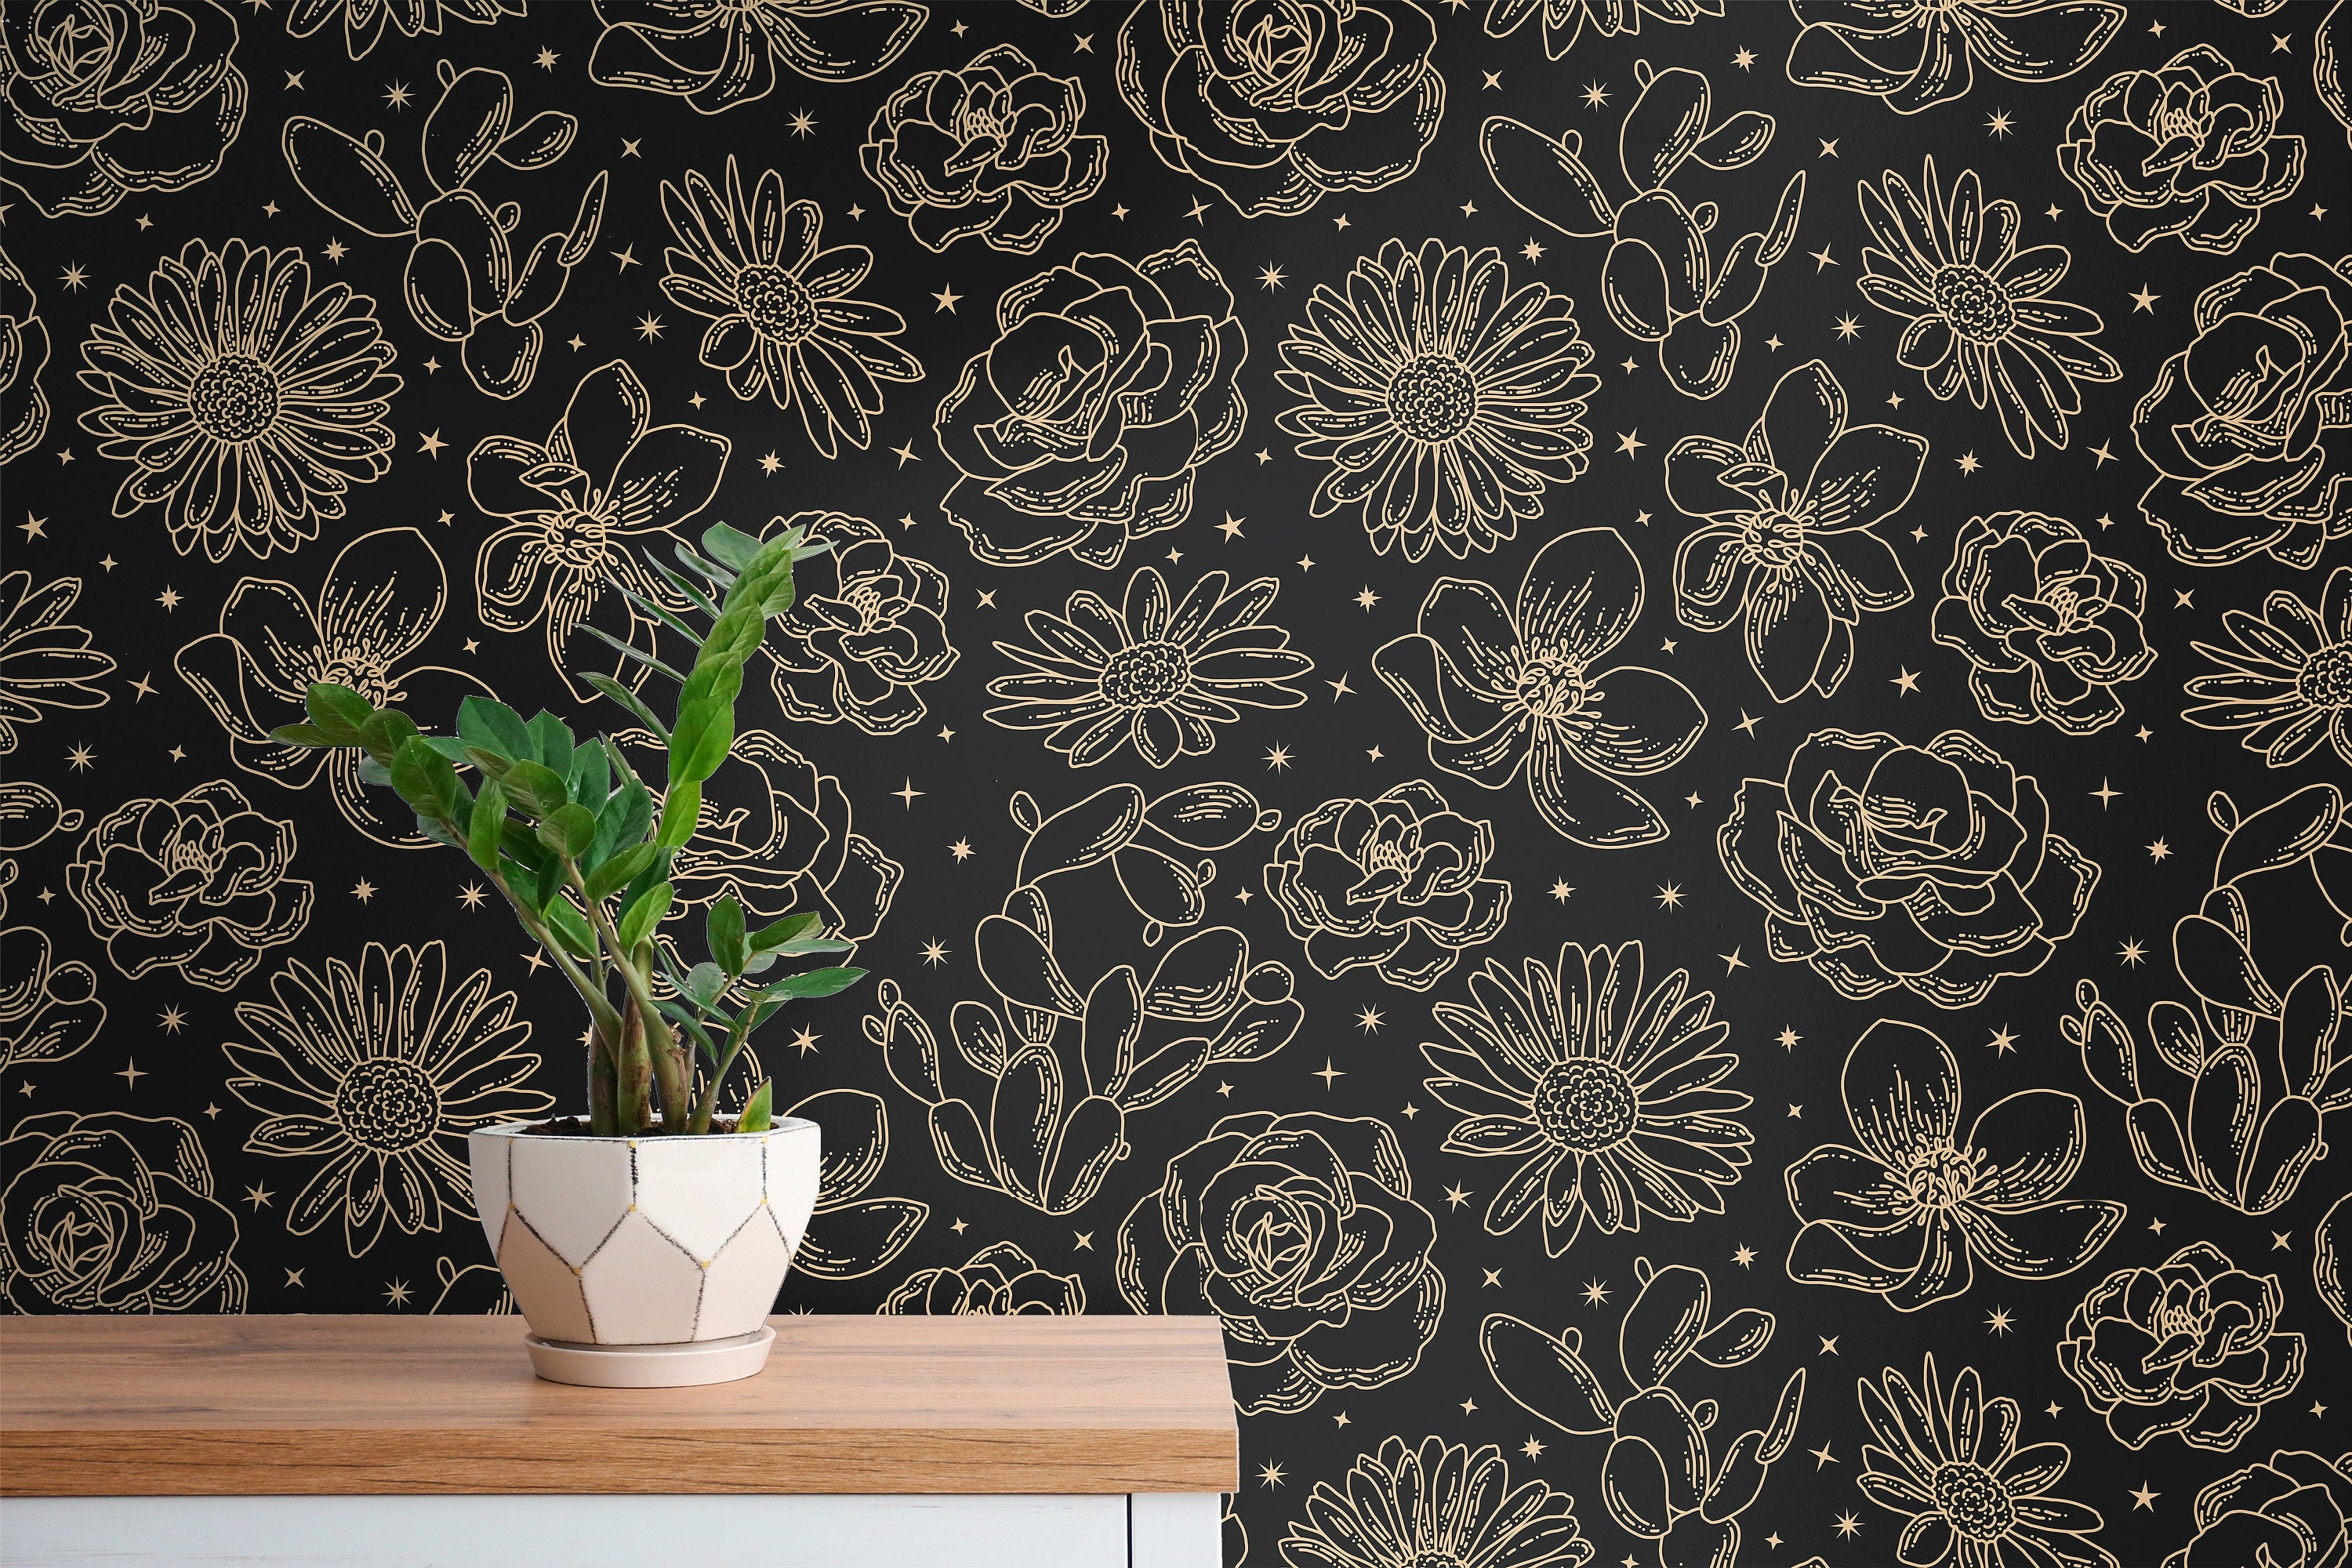 Removable Wallpaper Black Gold Floral Star Wallpaper | Peel And Stick Wallpaper | Adhesive Wallpaper | Wall Paper Peel Stick Wall Mural 3532 - JamesAndColors